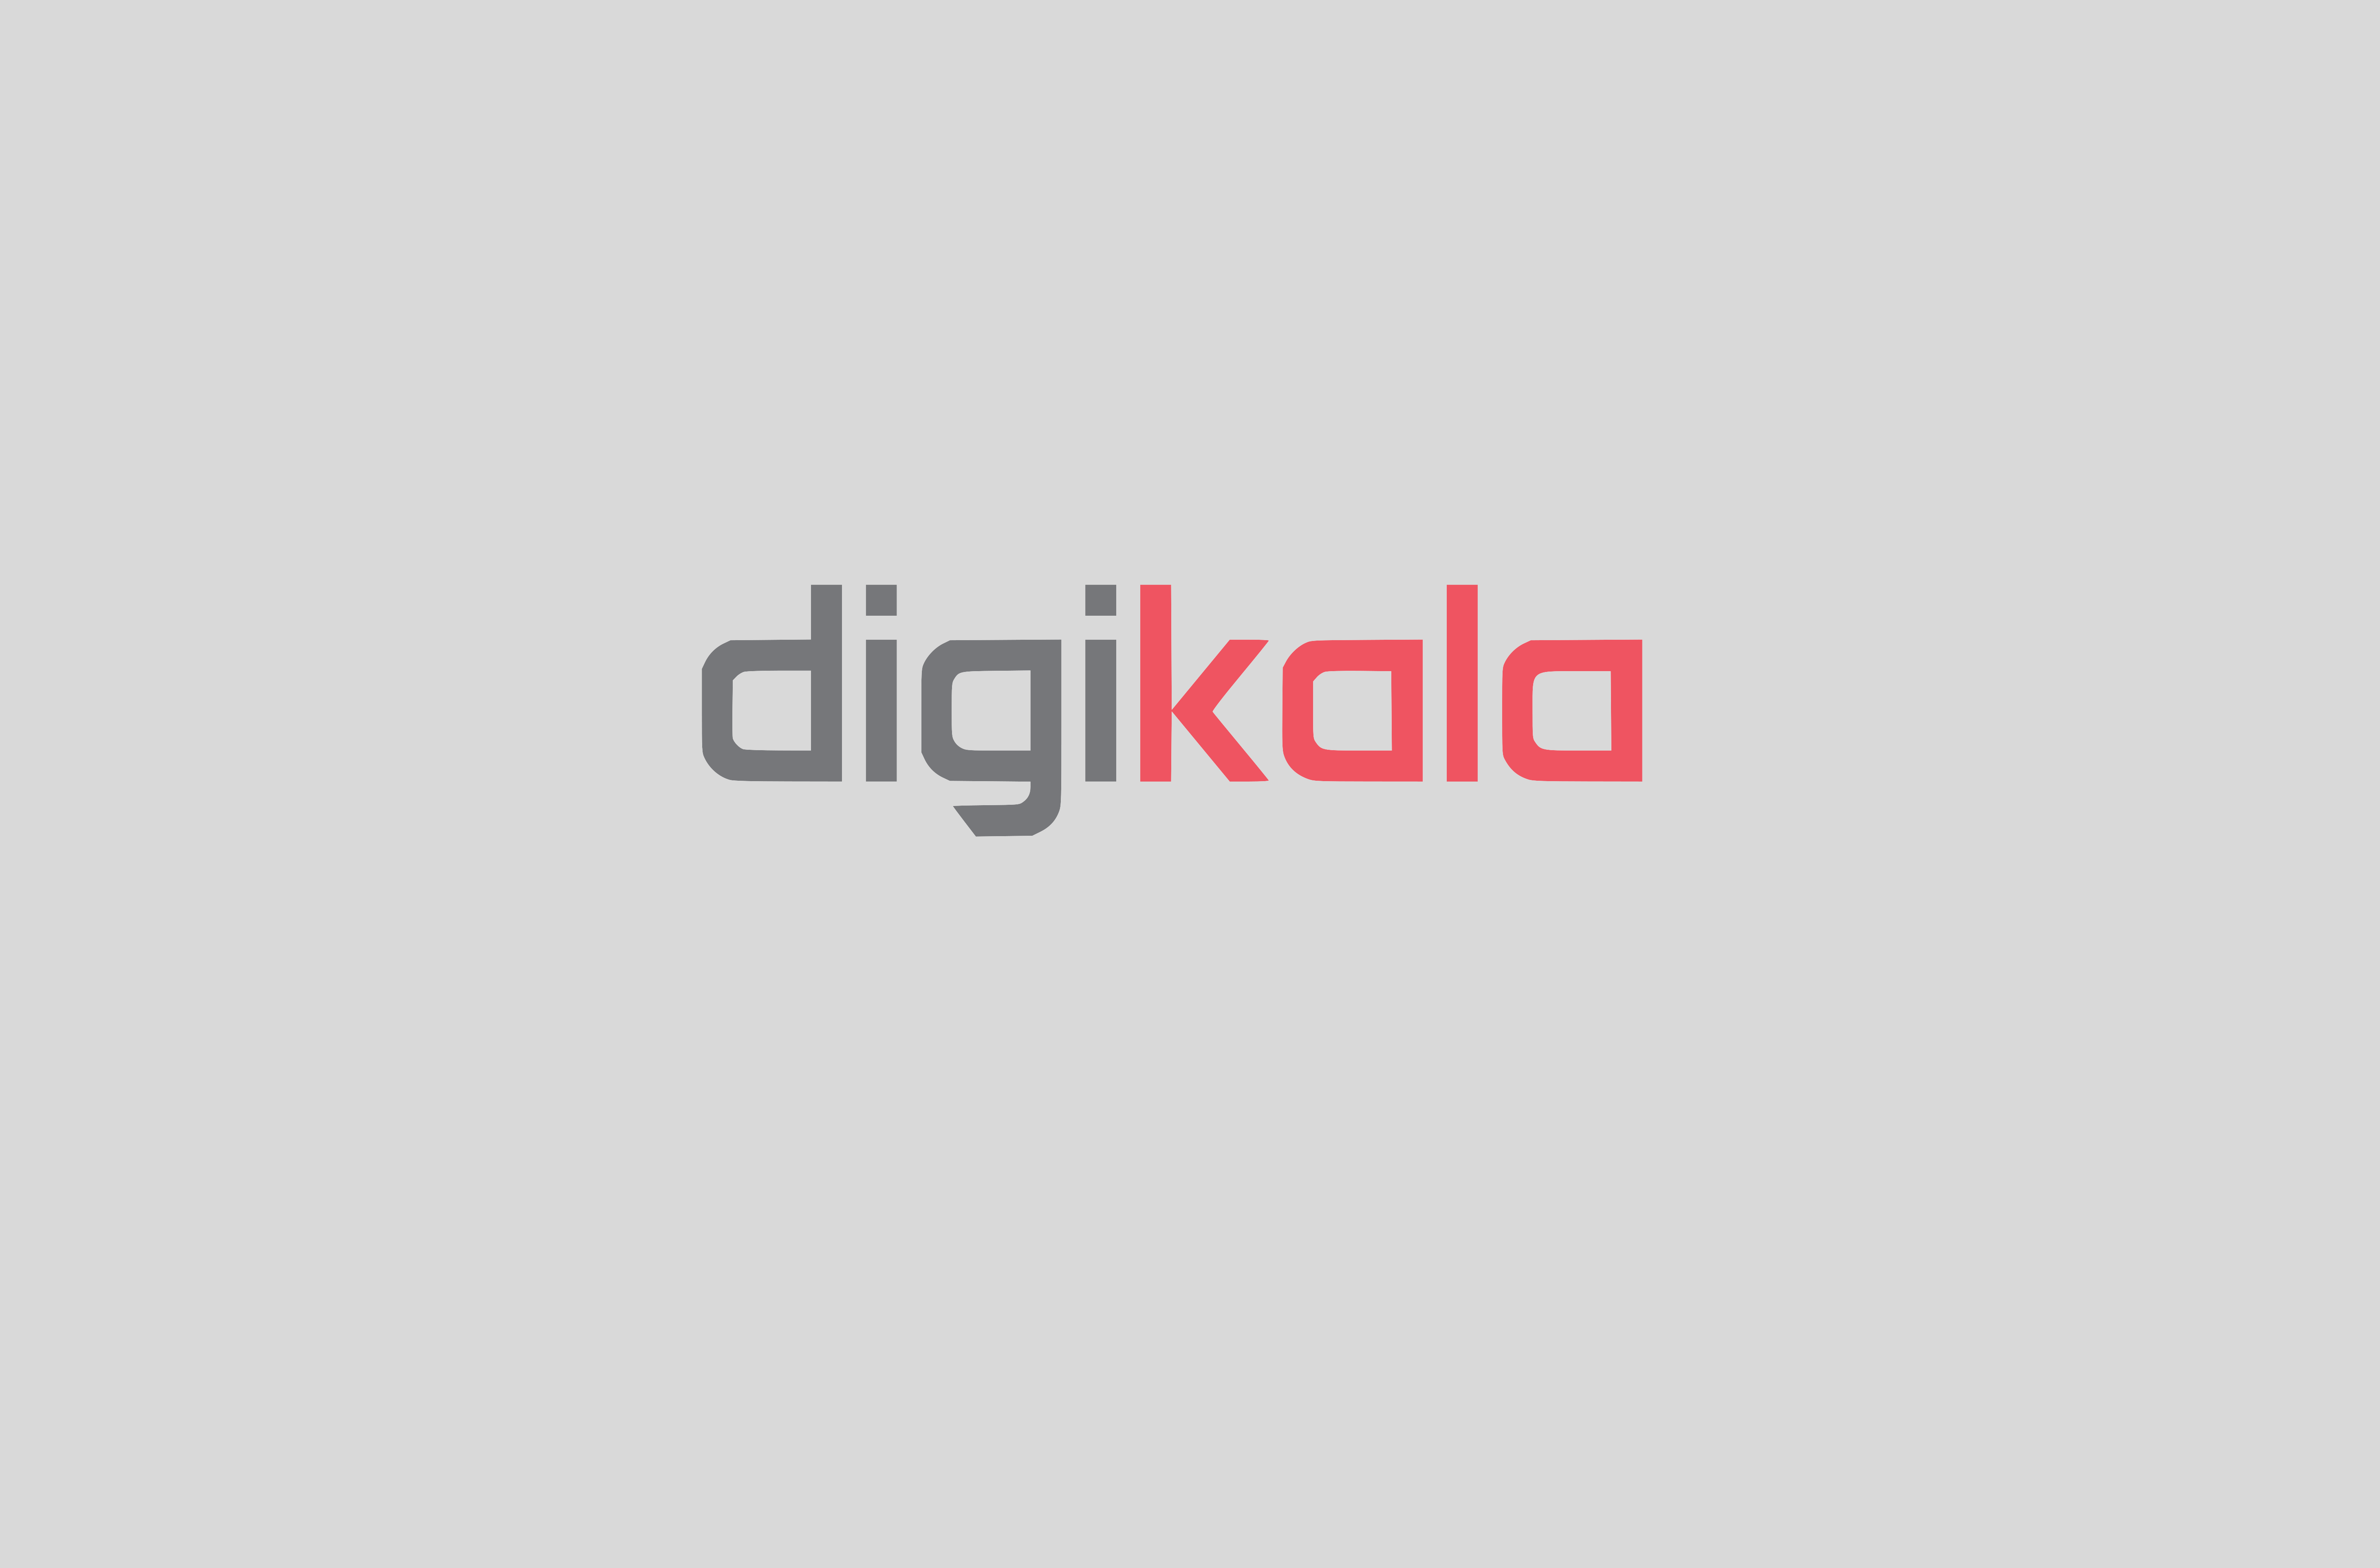 Data Analyzing of Digikala